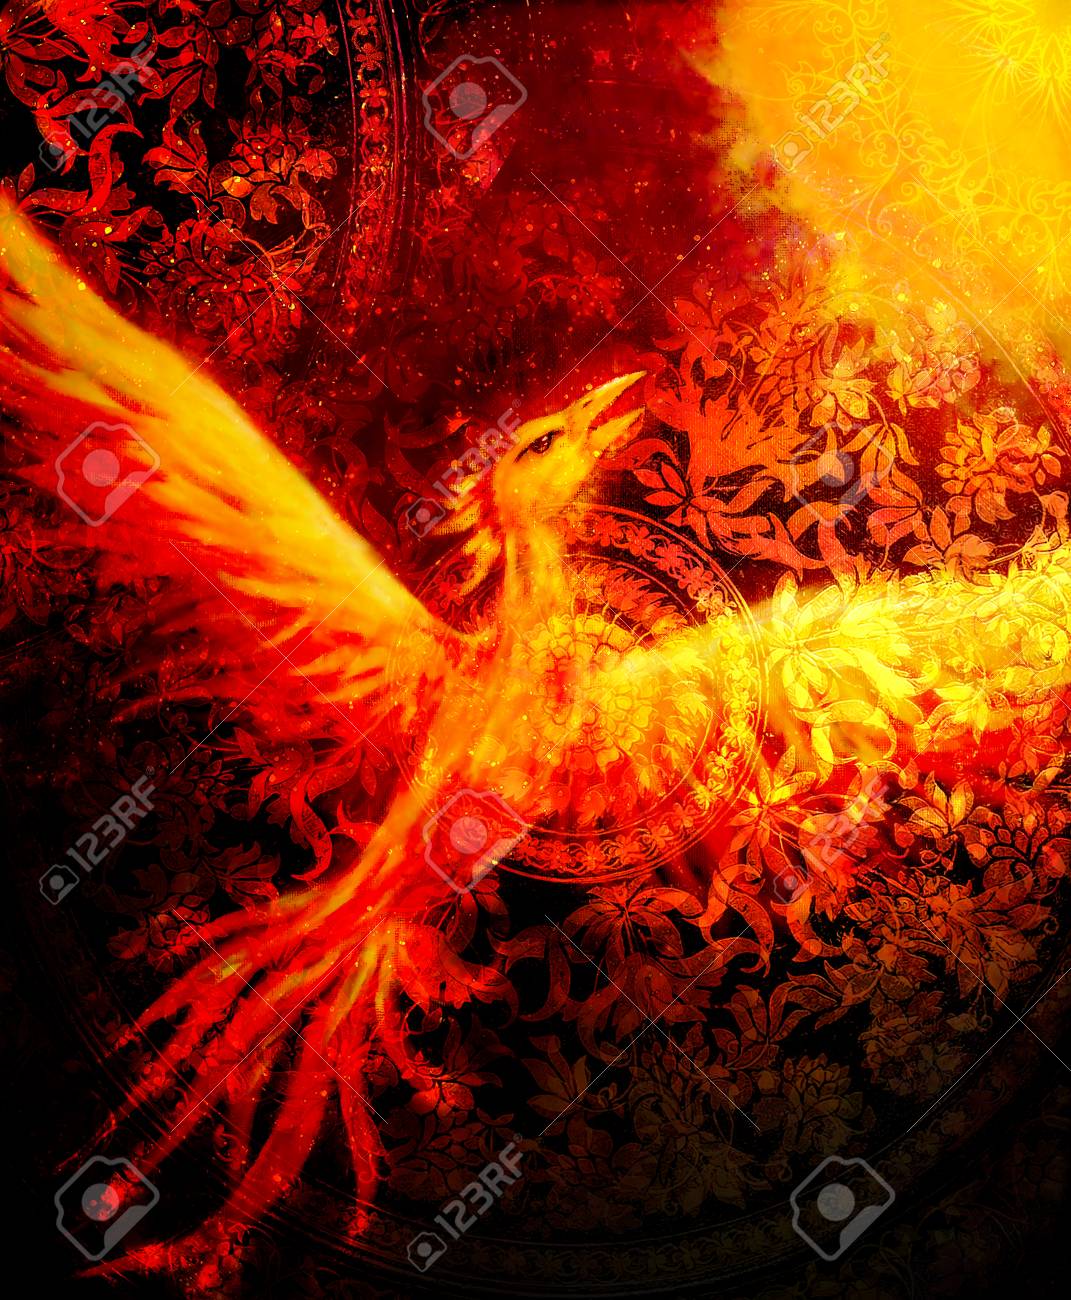 Flying Phoenix Bird As Symbol Of Rebirth And New Beginning